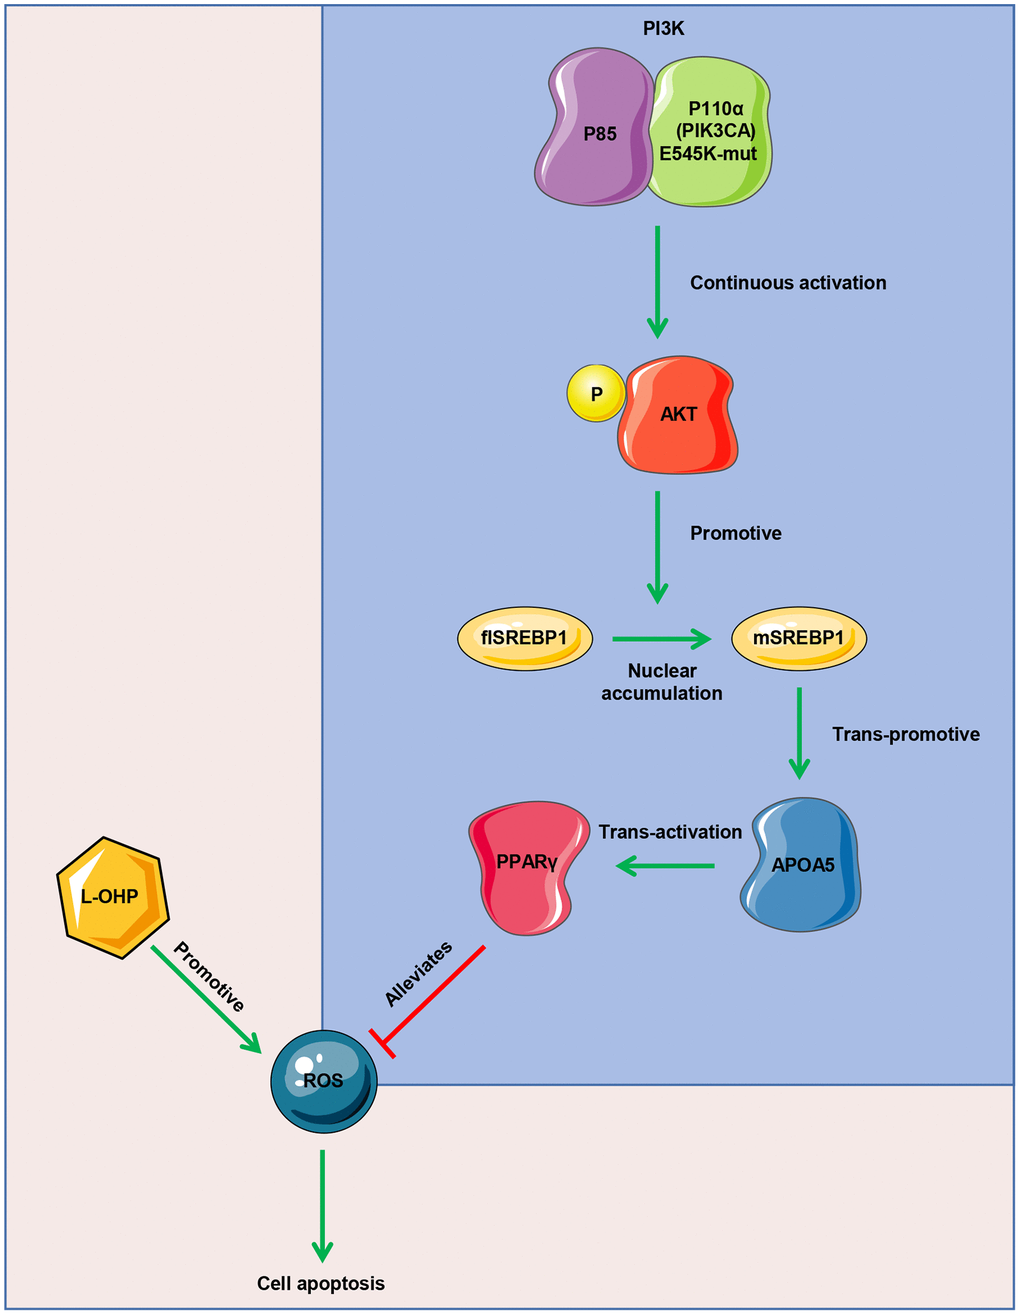 Mode diagram of the oxaliplatin resistance mechanism in PIK3CA mutant CRC cells.